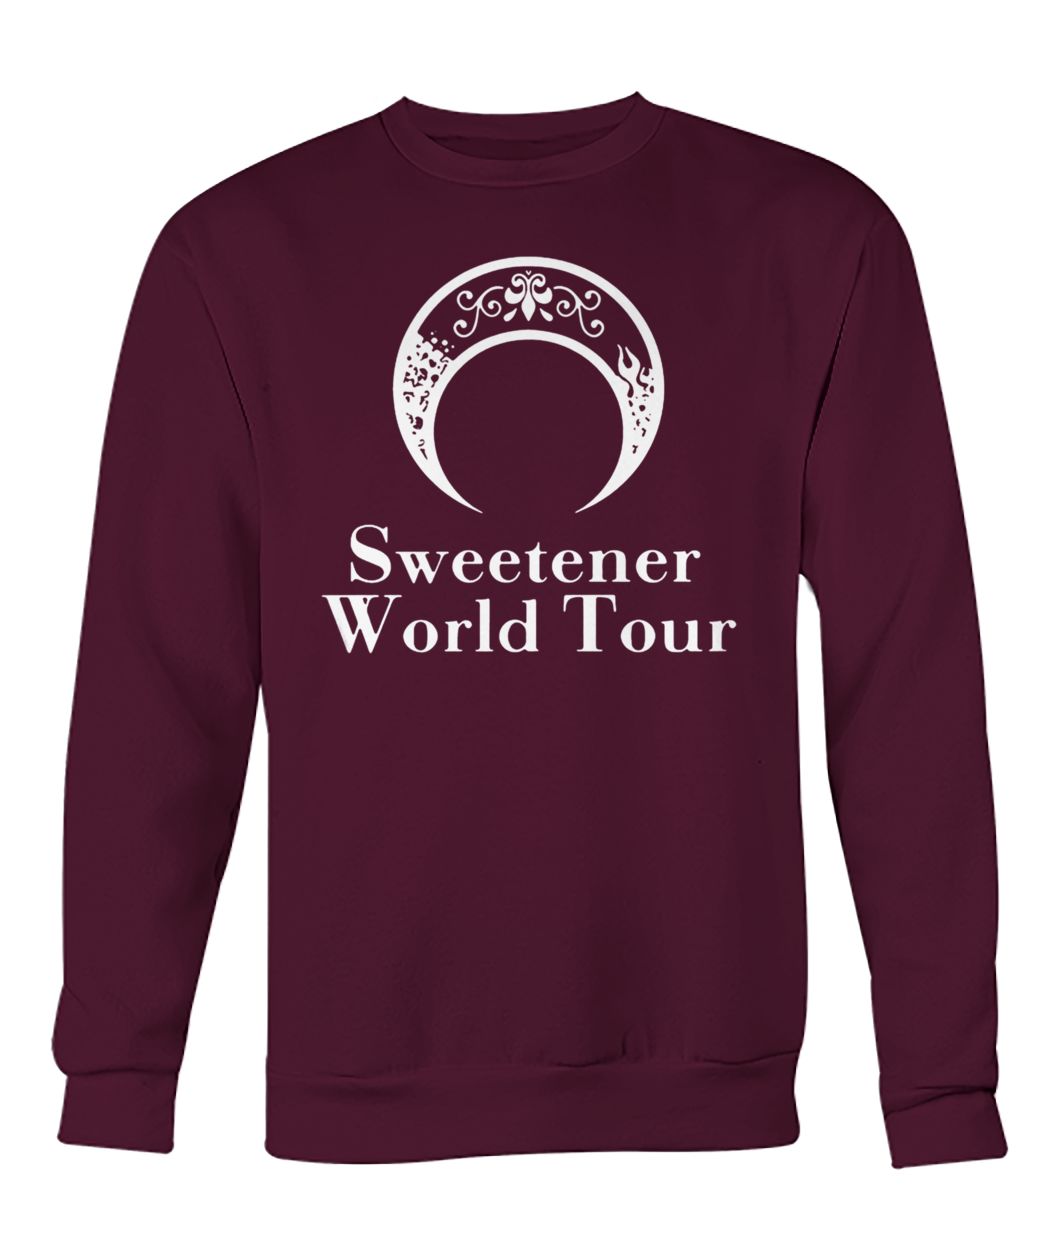 Sweetener world tour crew neck sweatshirt